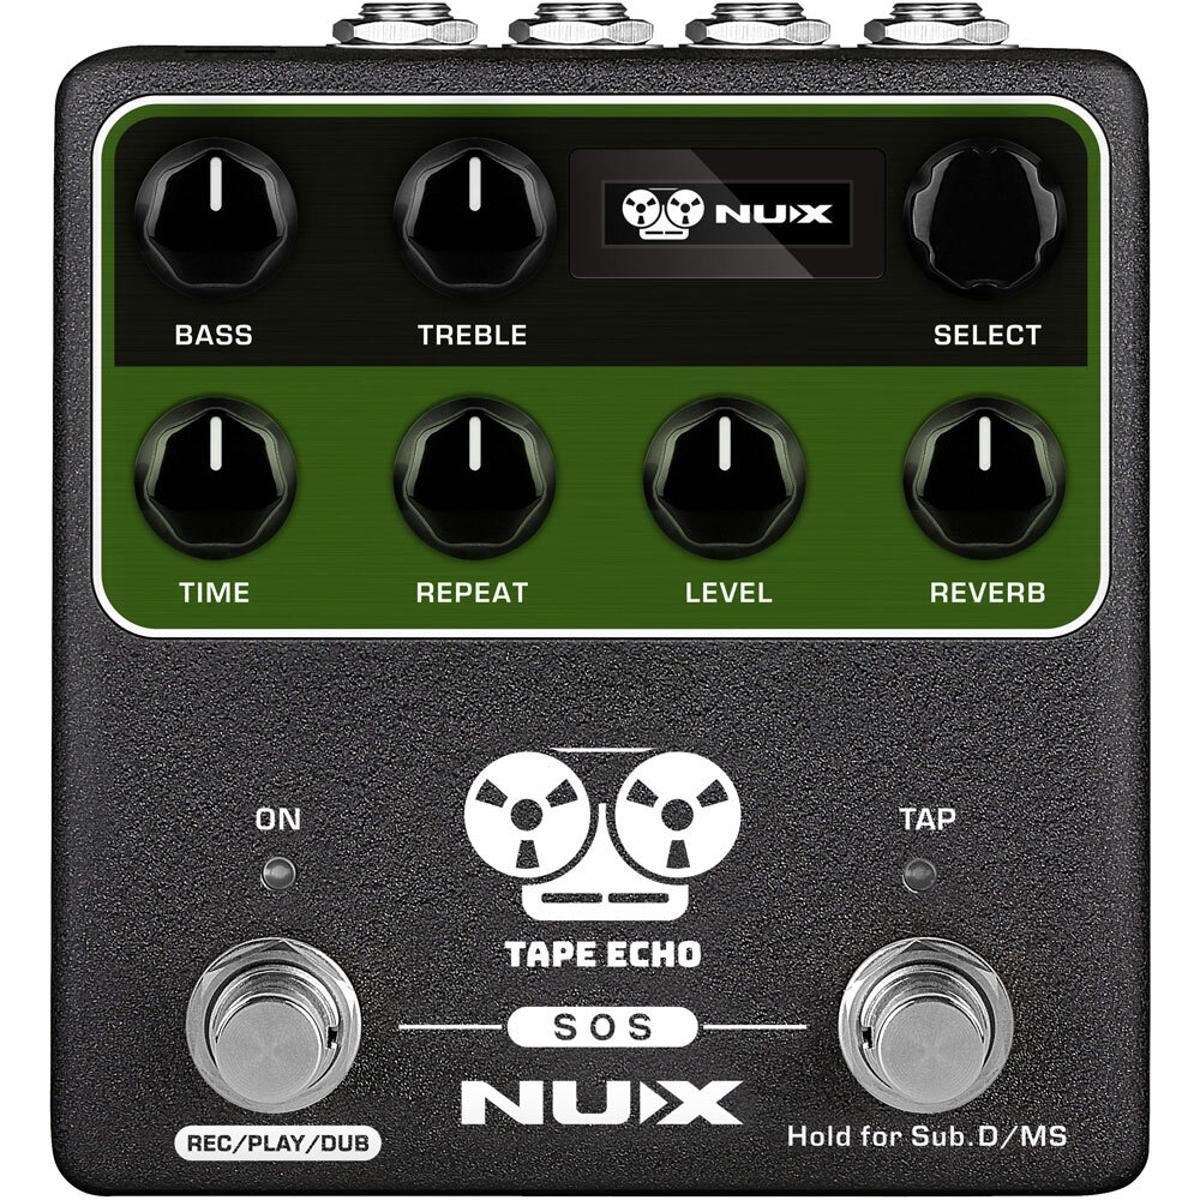 NU-X NXNDD7 Verdugo Series Tape Echo Effects Pedal